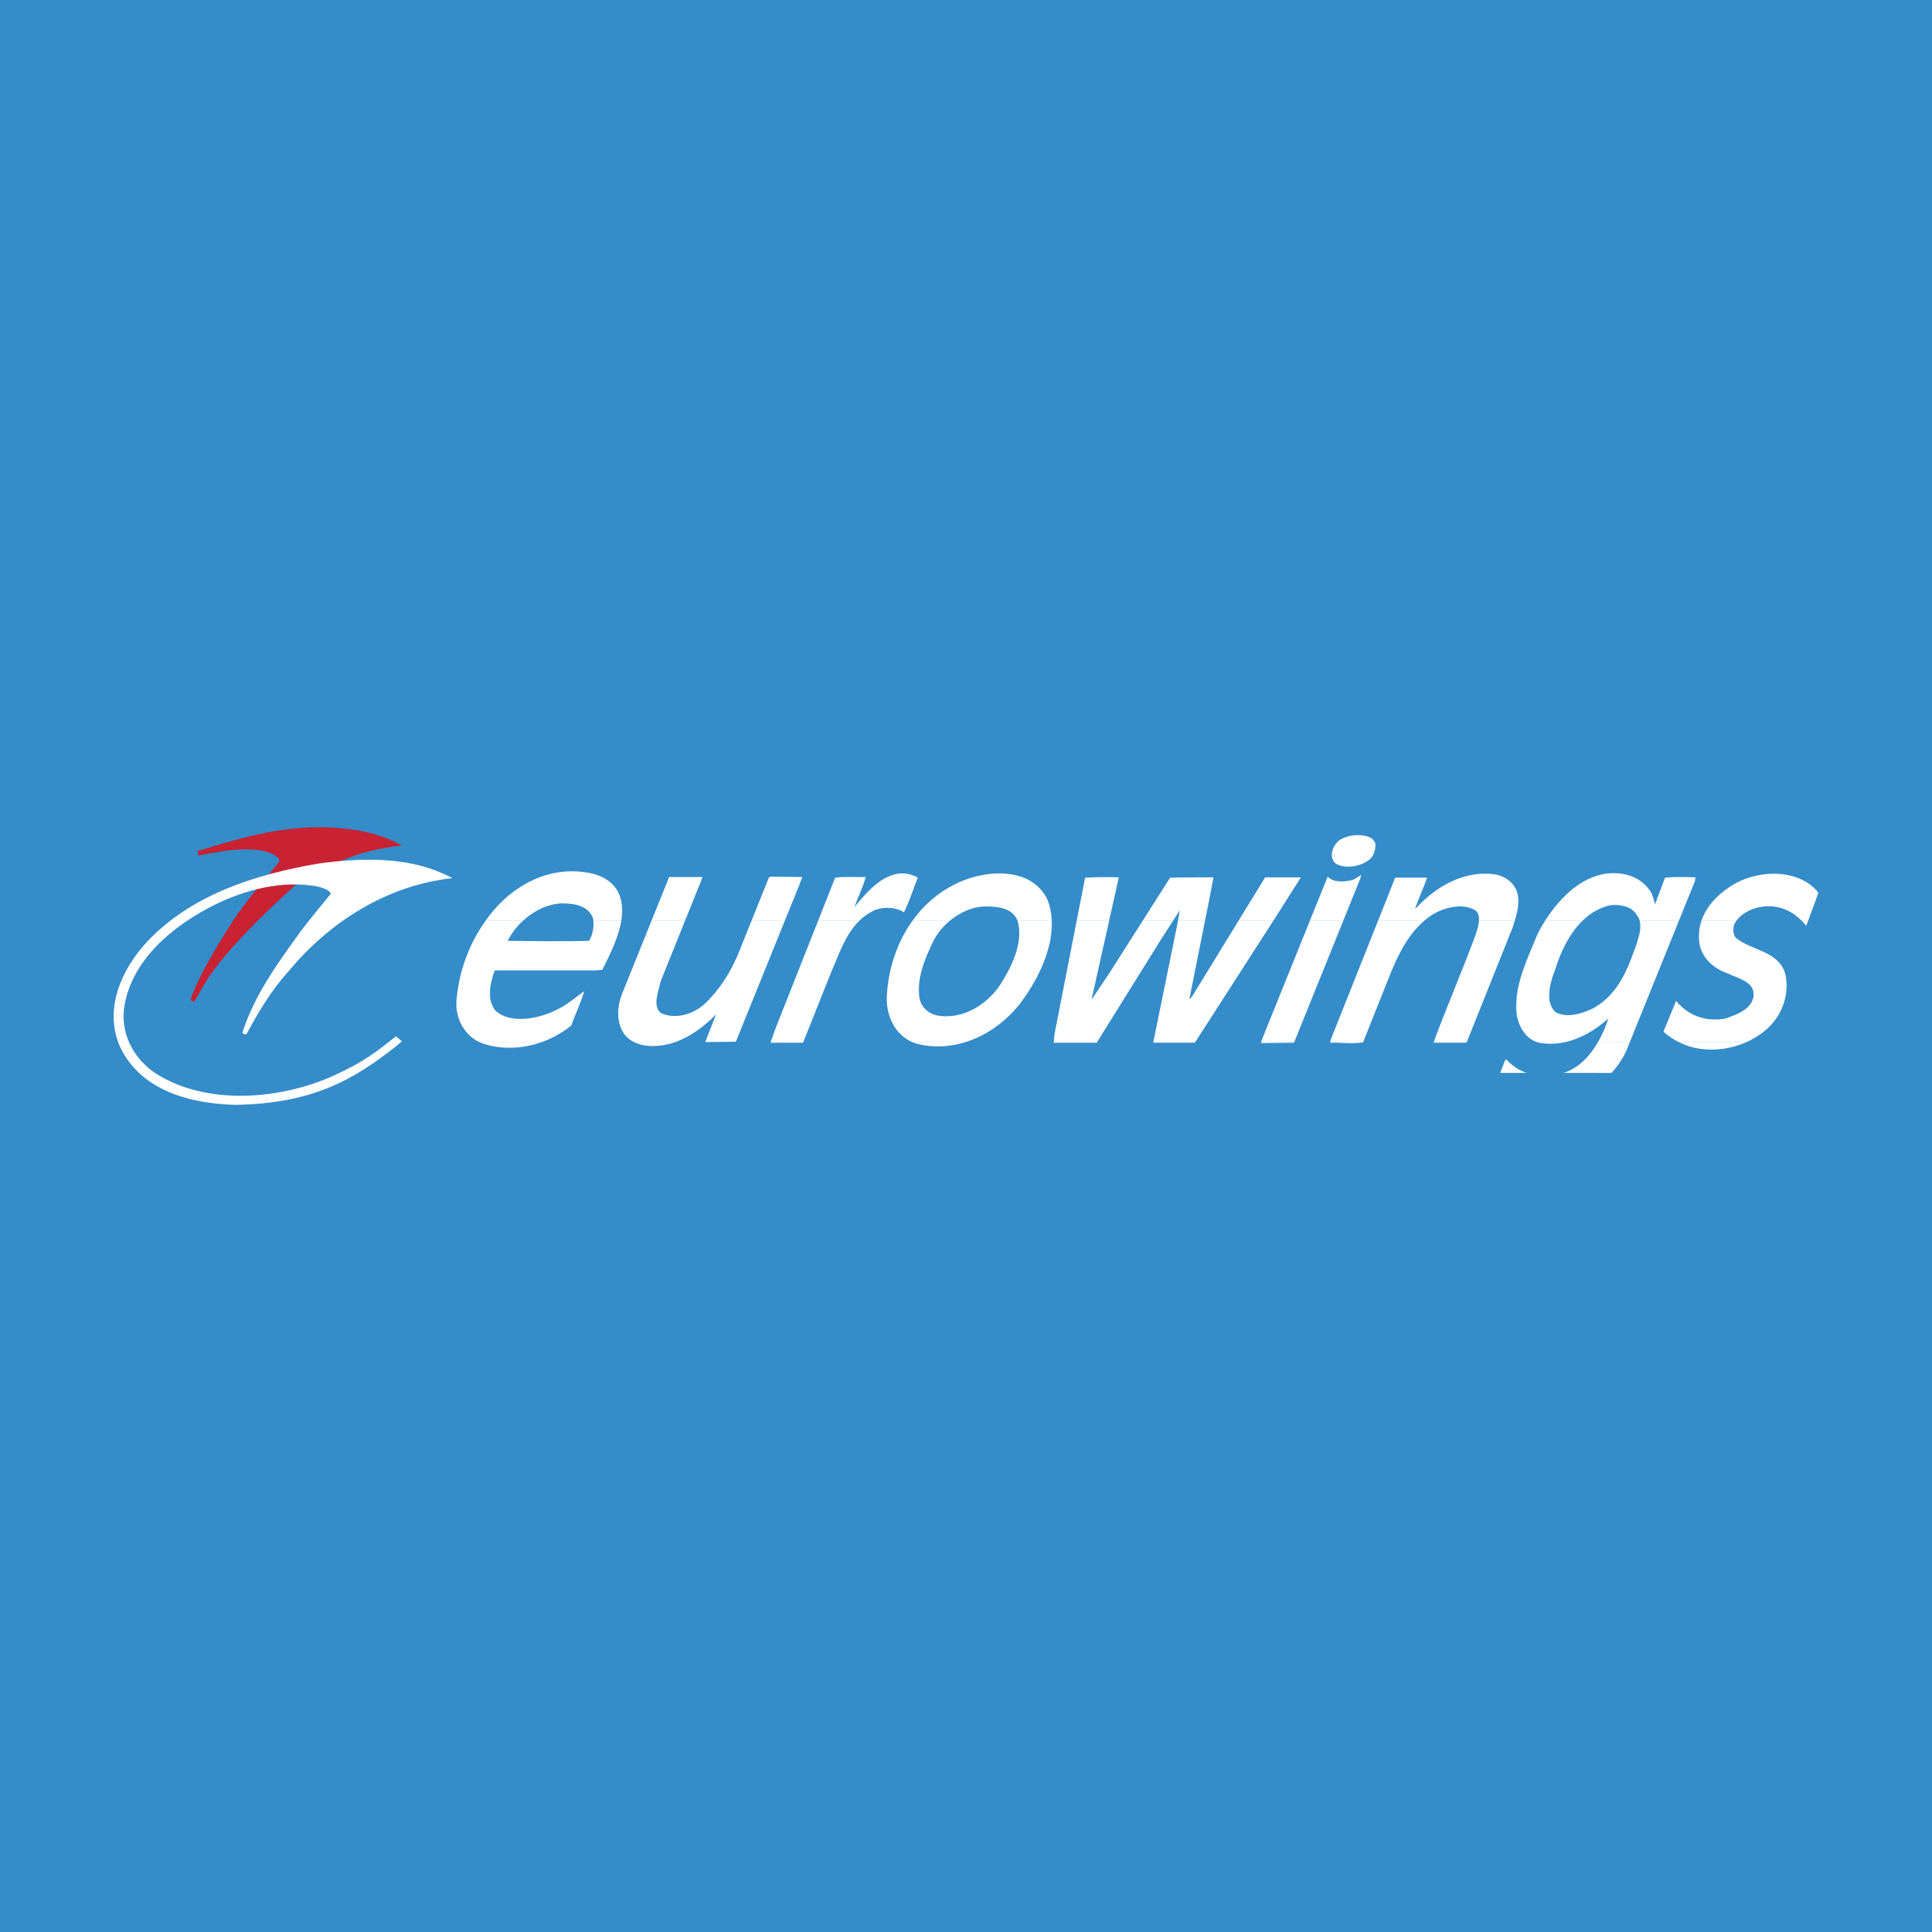 Eurowings Logo - Eurowings Logo PNG Transparent & SVG Vector - Freebie Supply